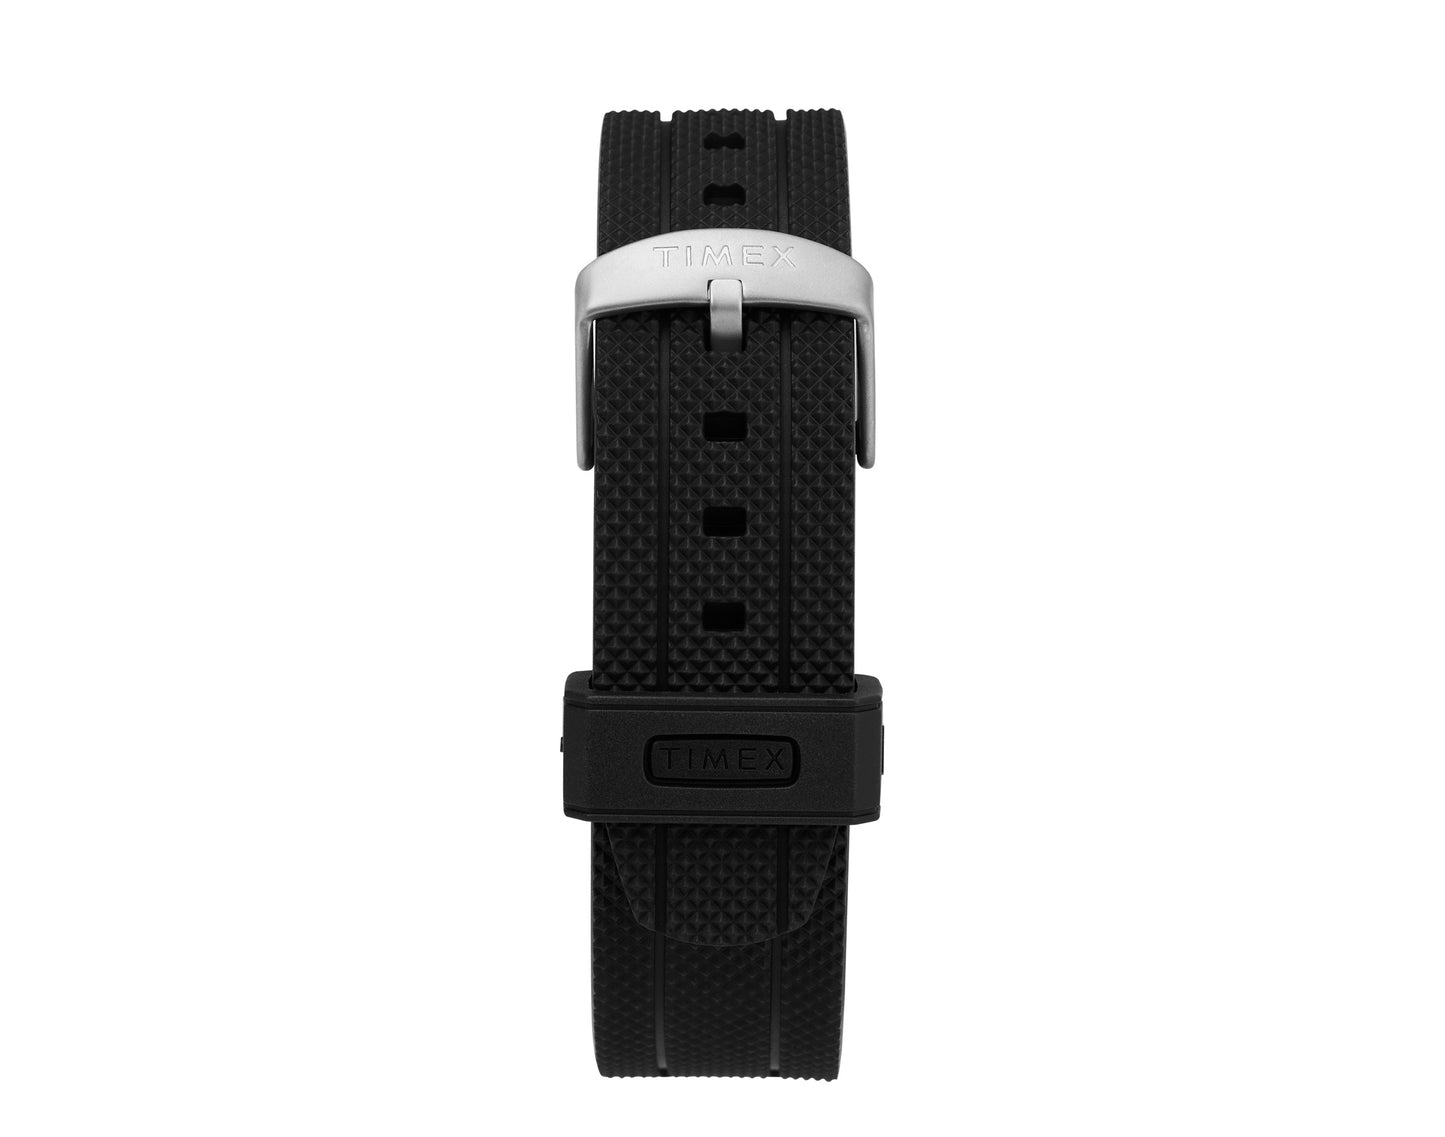 Timex Allied Coastline 43mm Silicone Strap Watch